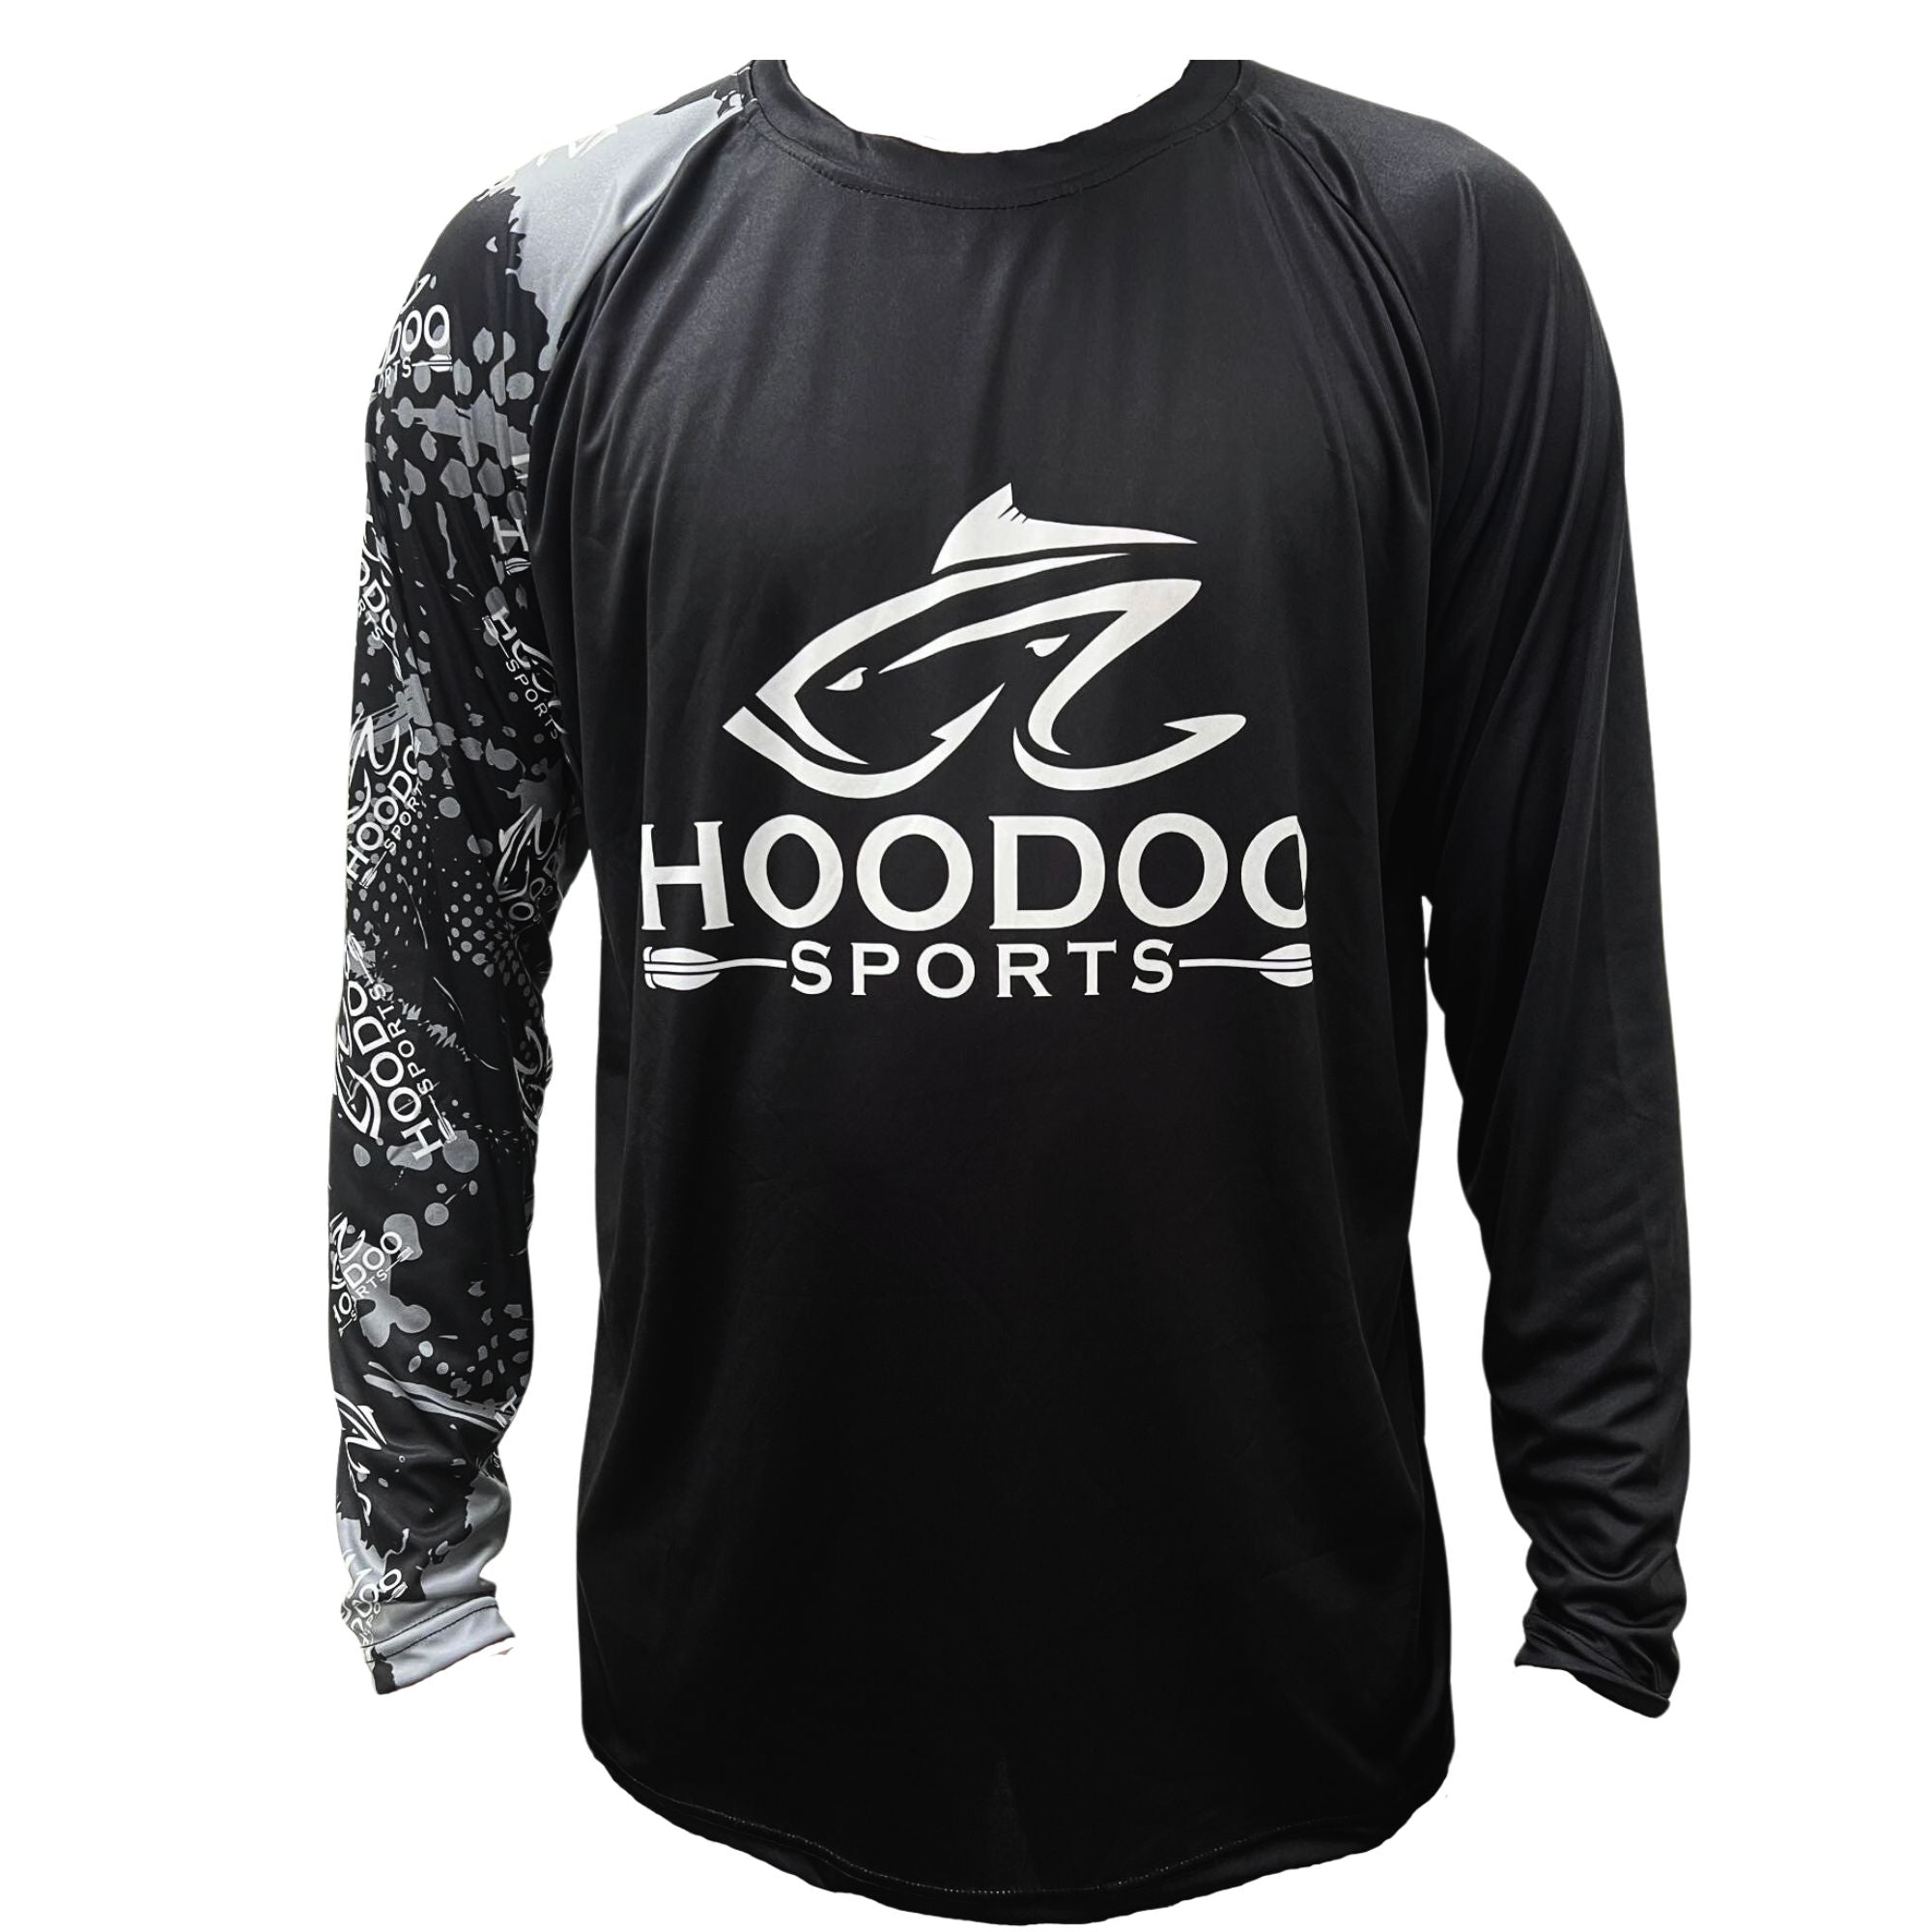 Buy black-and-hexi-gray Hoodoo Sun-Tek UV Protection Long Sleeve Fishing Shirt